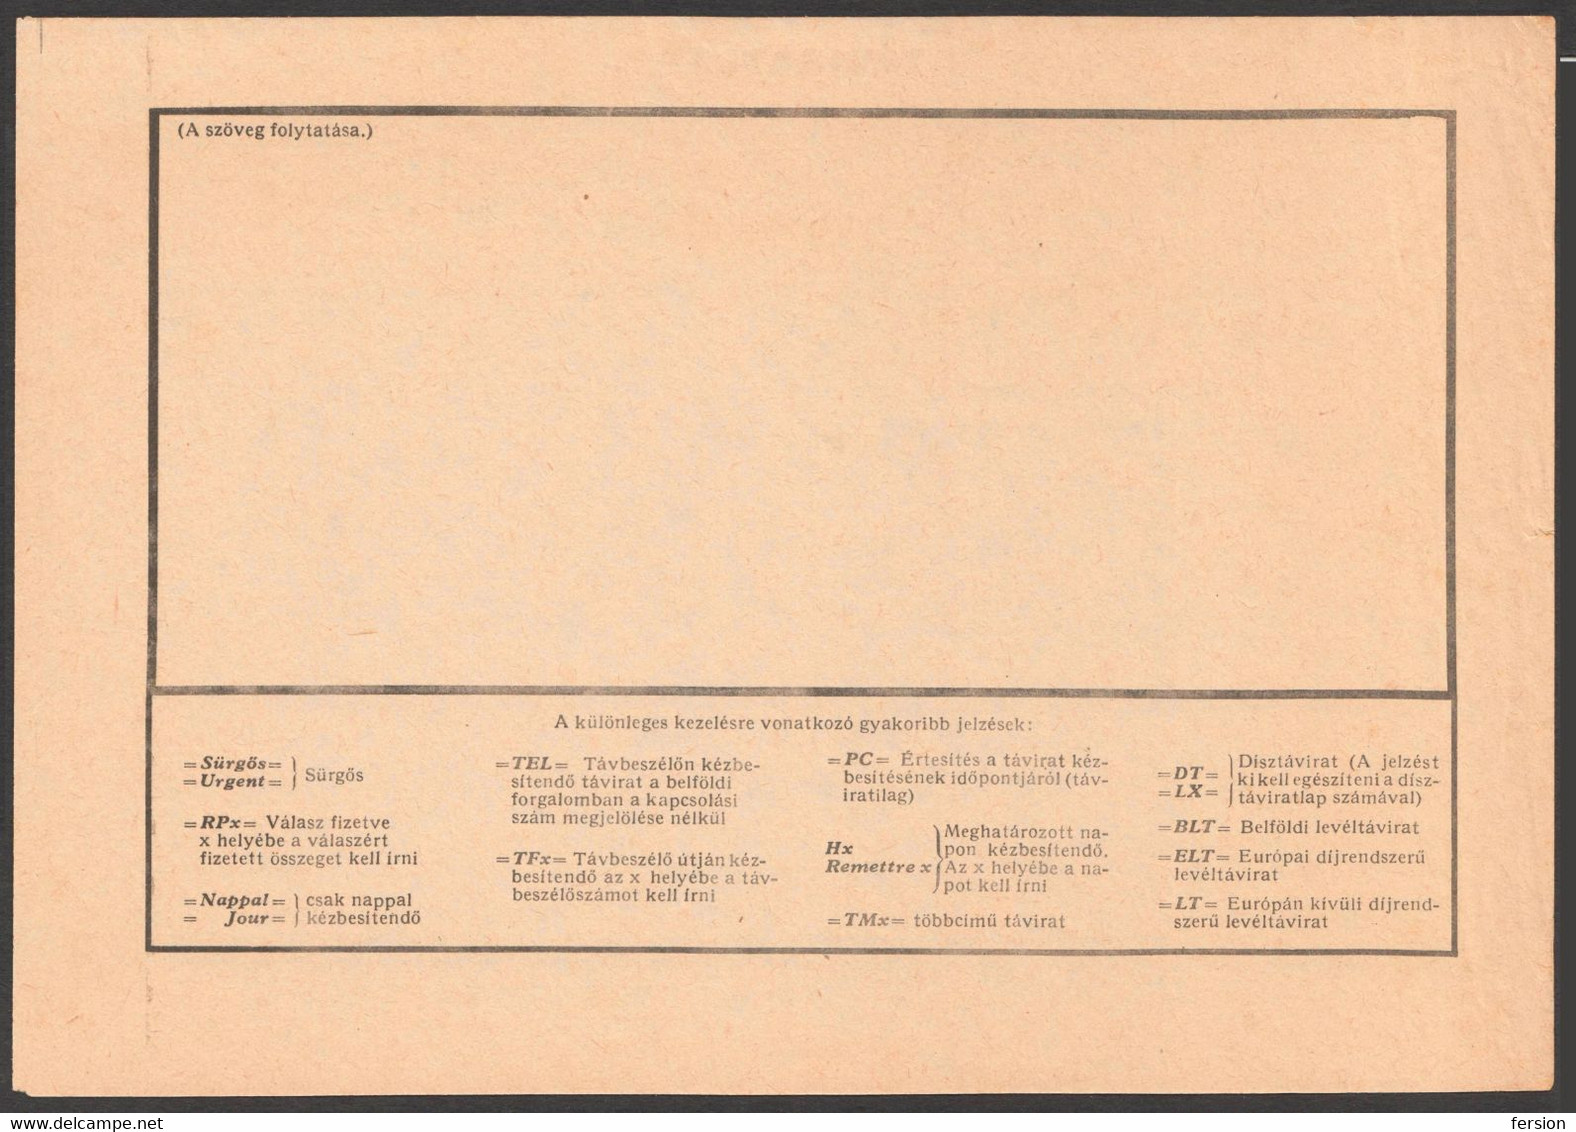 1960 Hungary TELEGRAPH TELEGRAM Blank Form - Stamped Stationery - Telegraphenmarken